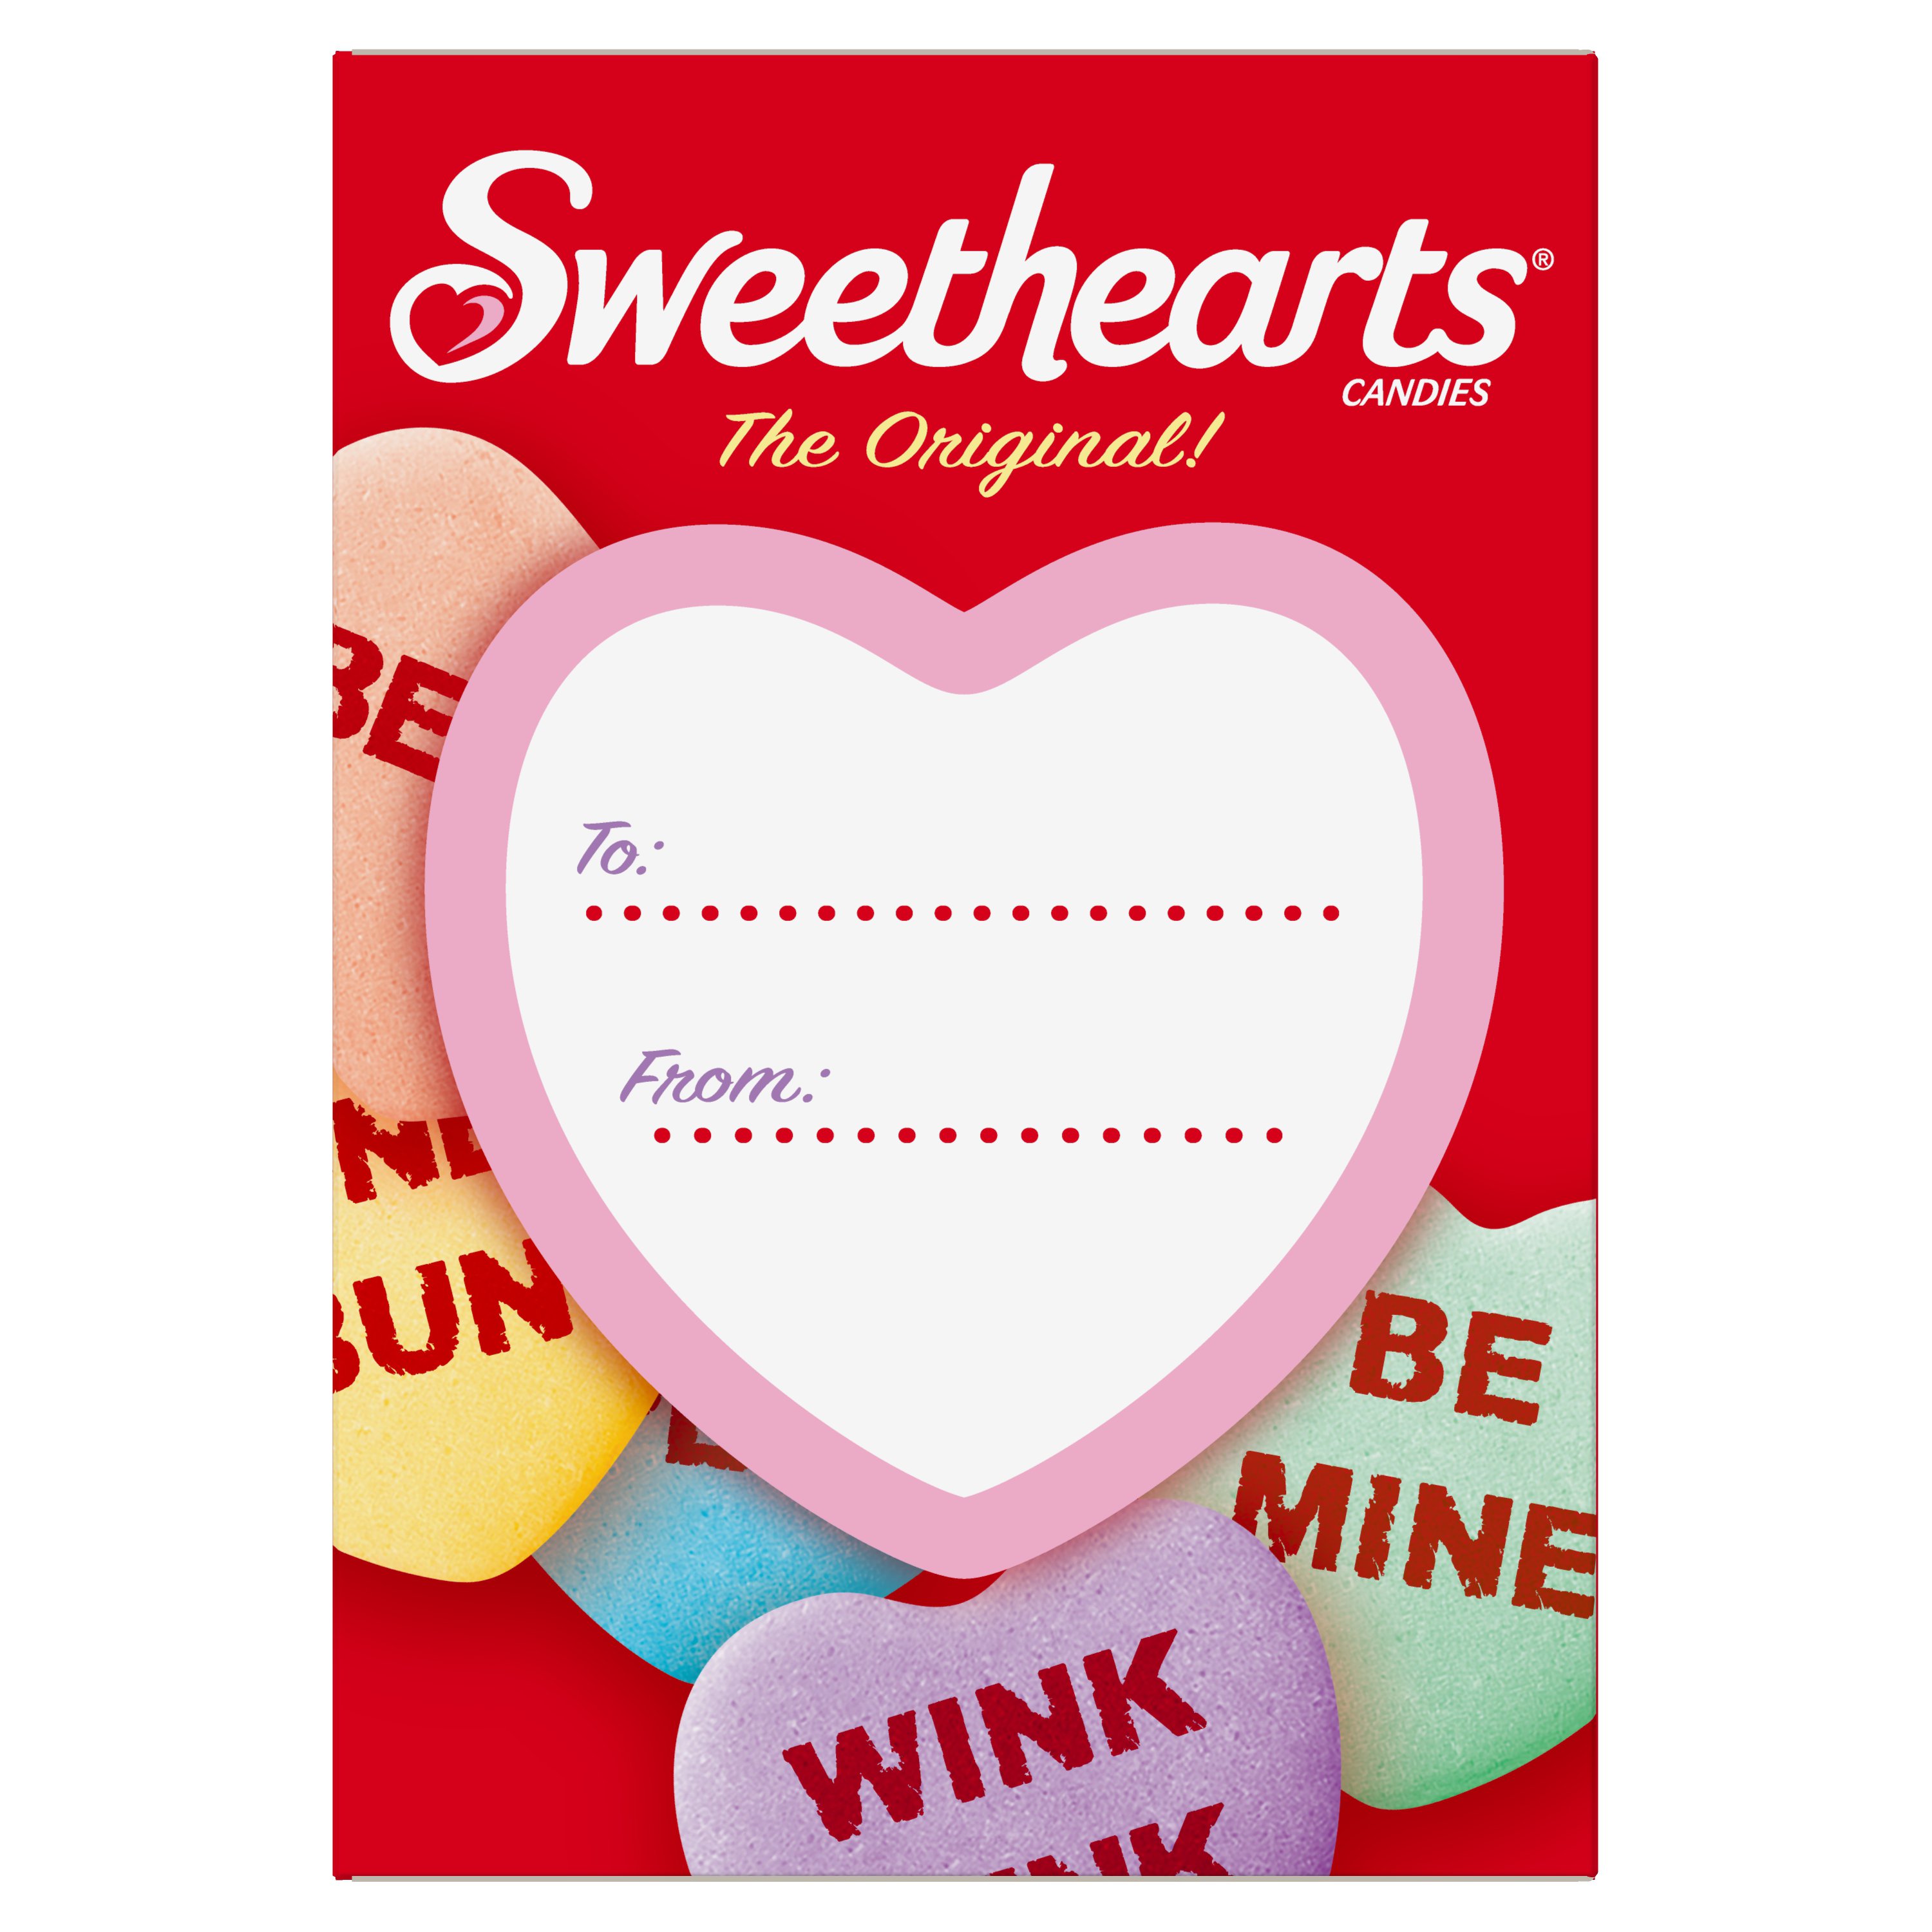 Brach's Wisecracks Conversation Hearts Valentine's Candy - Shop Candy at  H-E-B